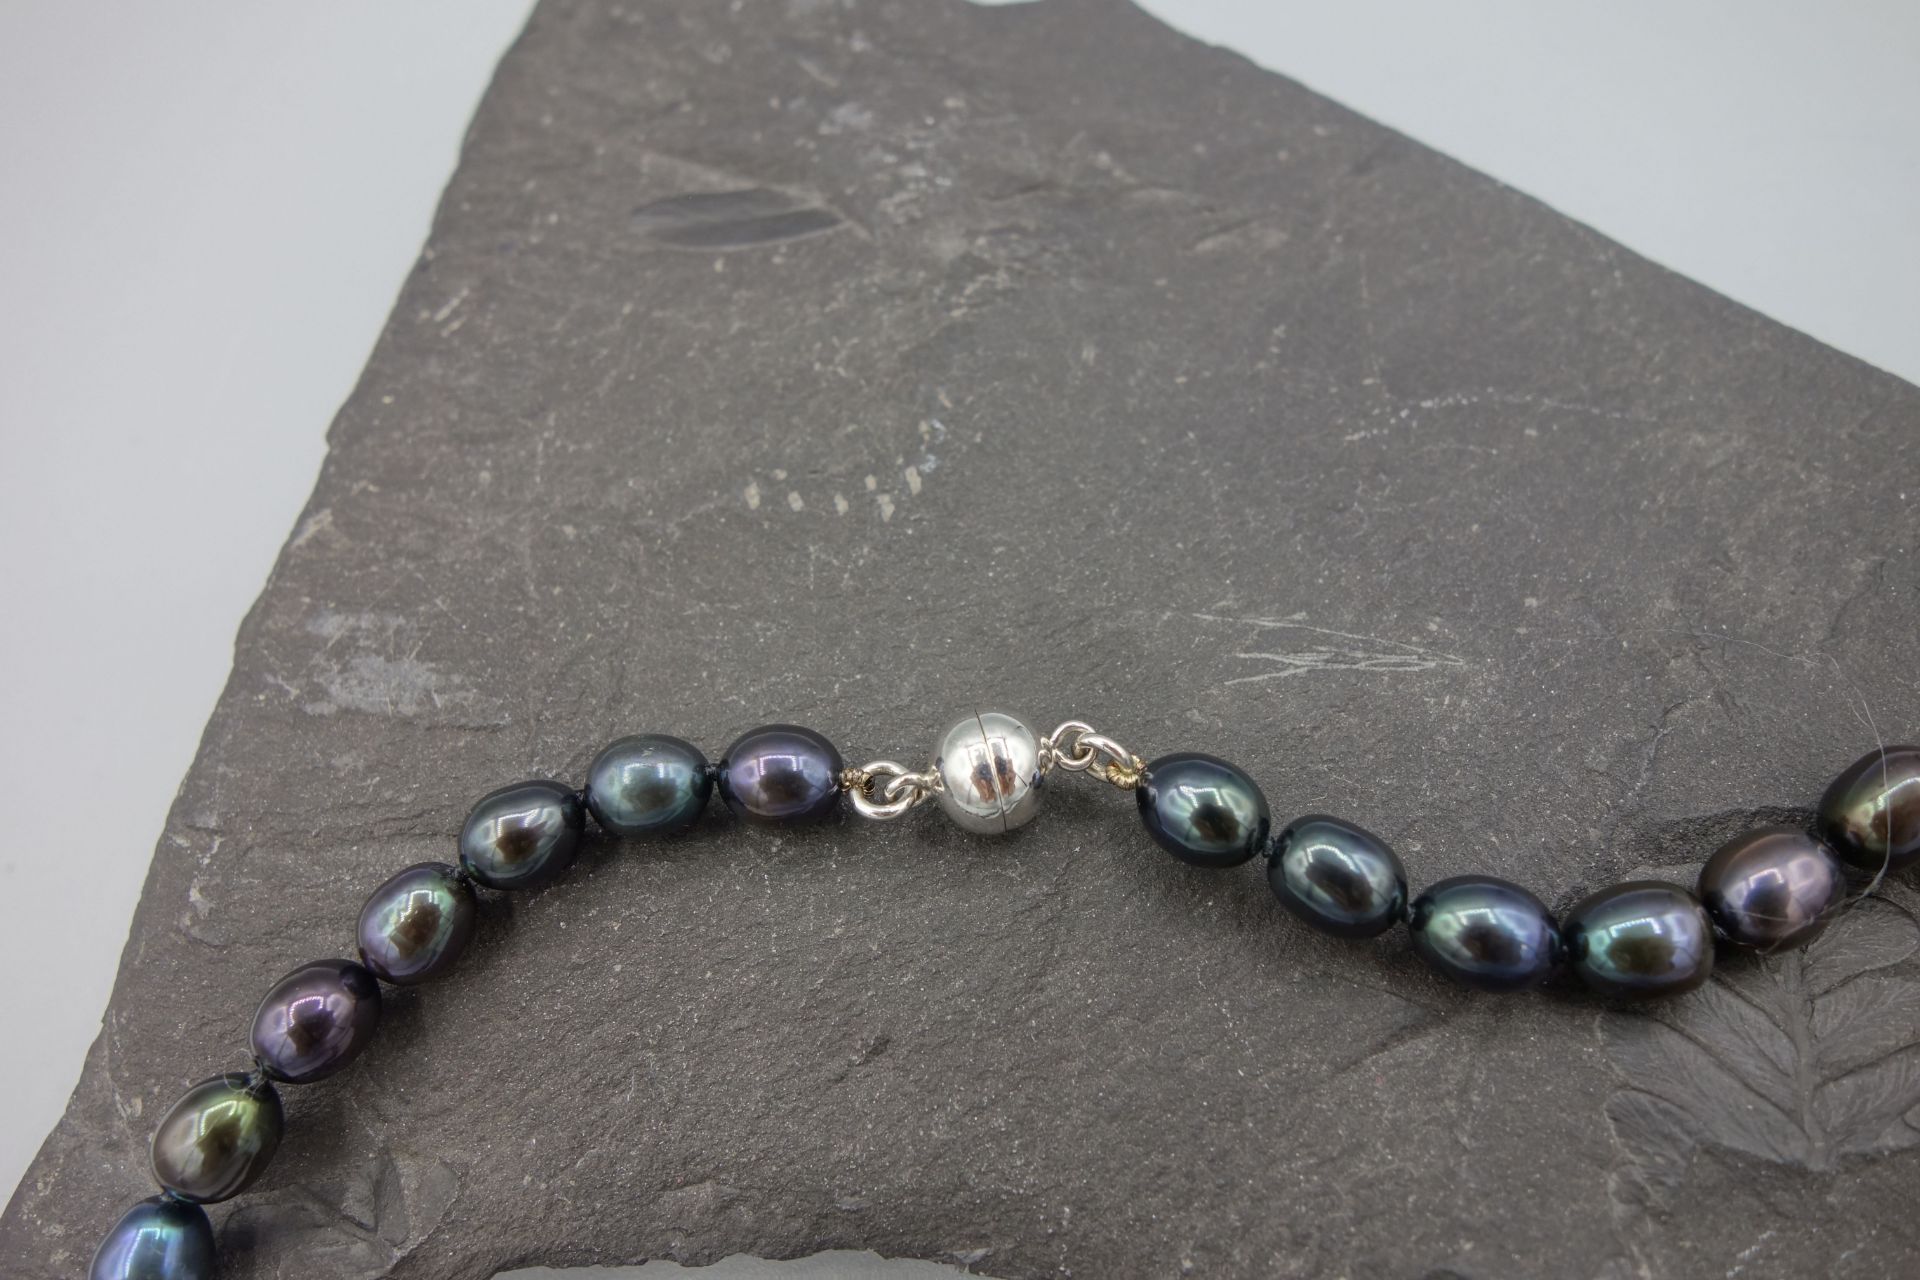 tahiti pearl necklace - Image 3 of 3